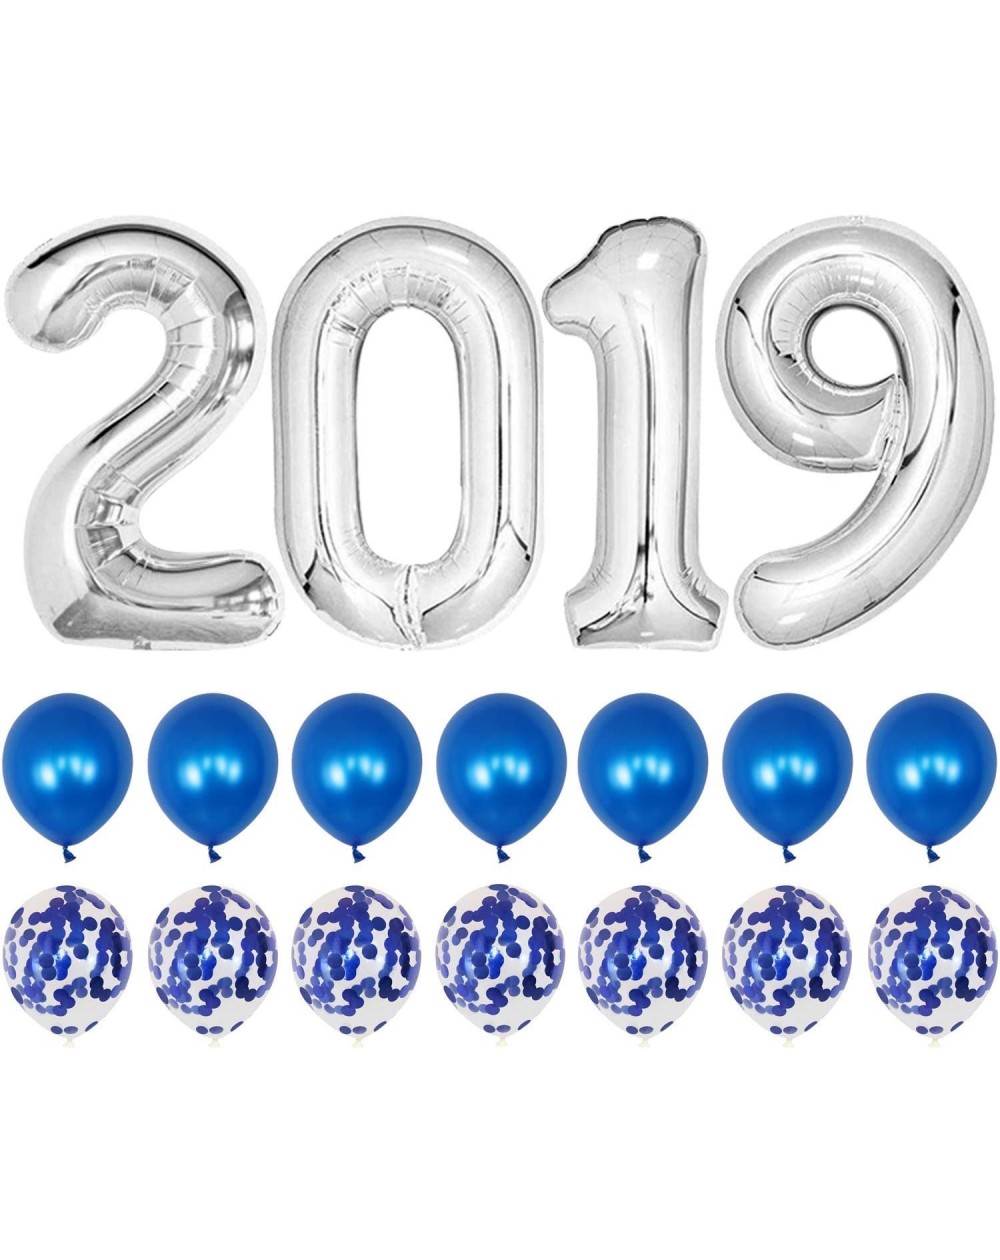 Balloons 2020 Balloons Blue Confetti Balloon - Blue Graduation Party Supplies 2020 - Graduation Decorations Blue - Large 2020...